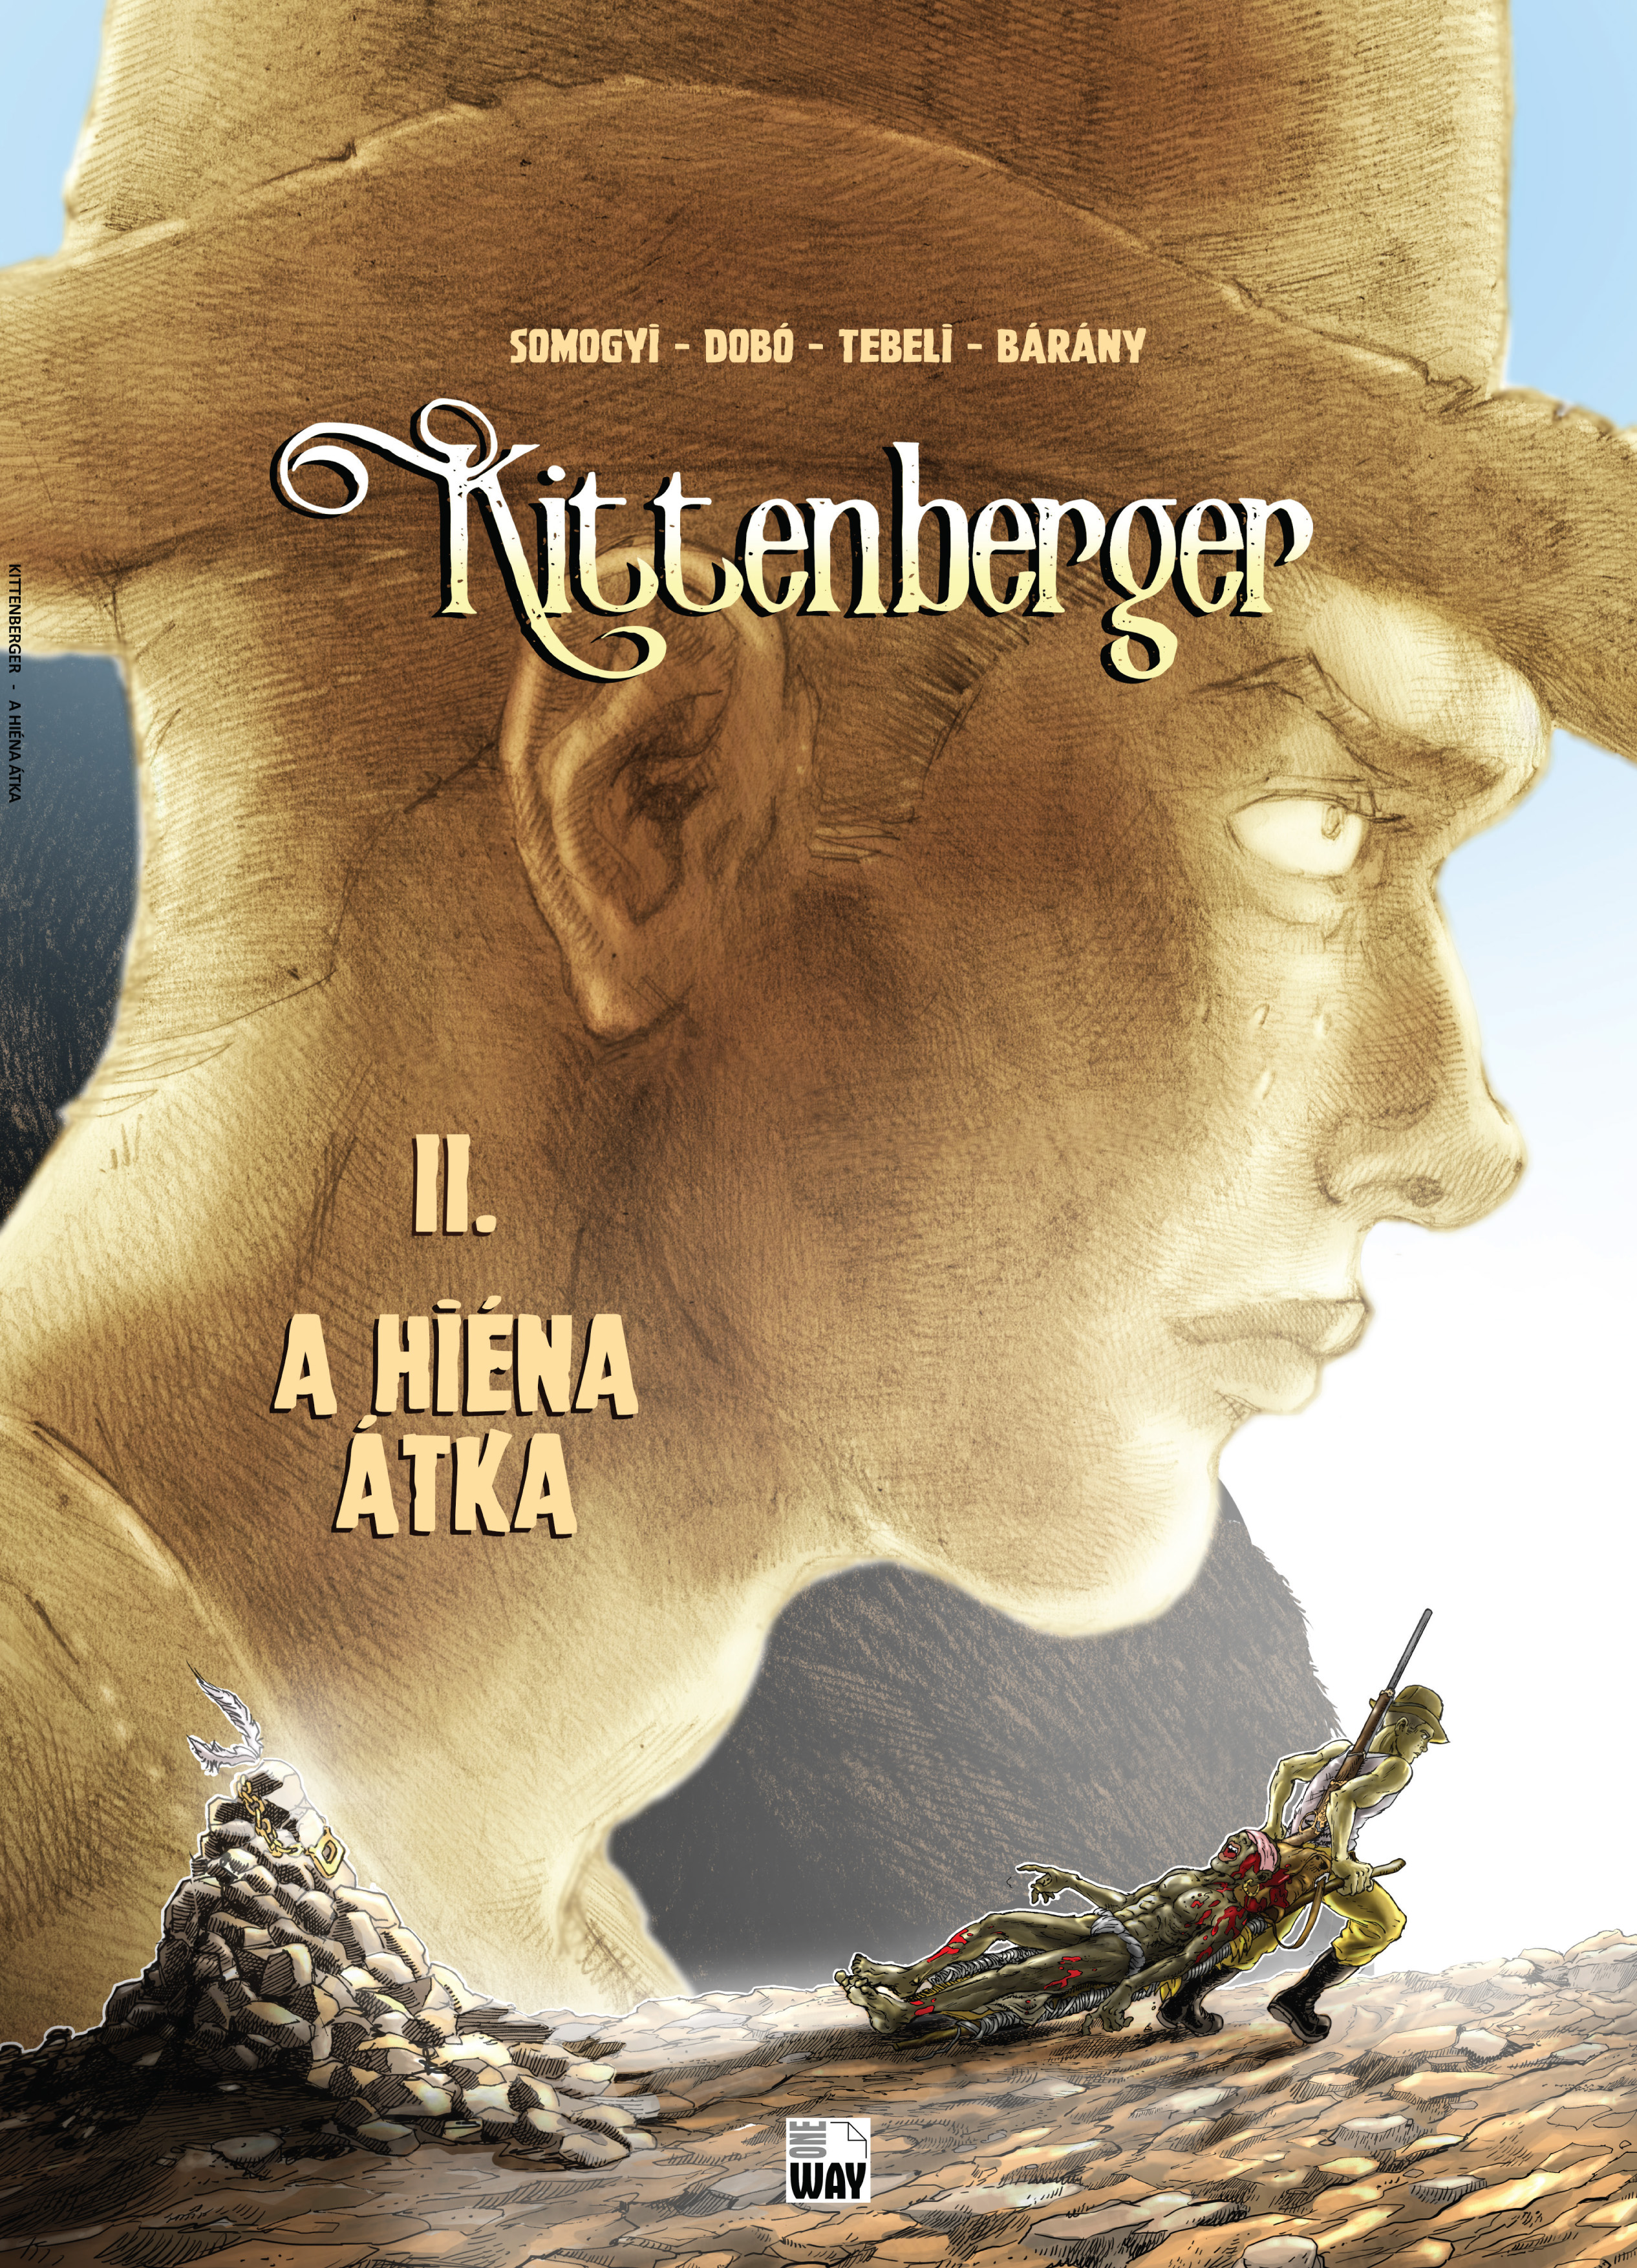 kittenberger_a_hiena_atka_cover-1-1.jpg